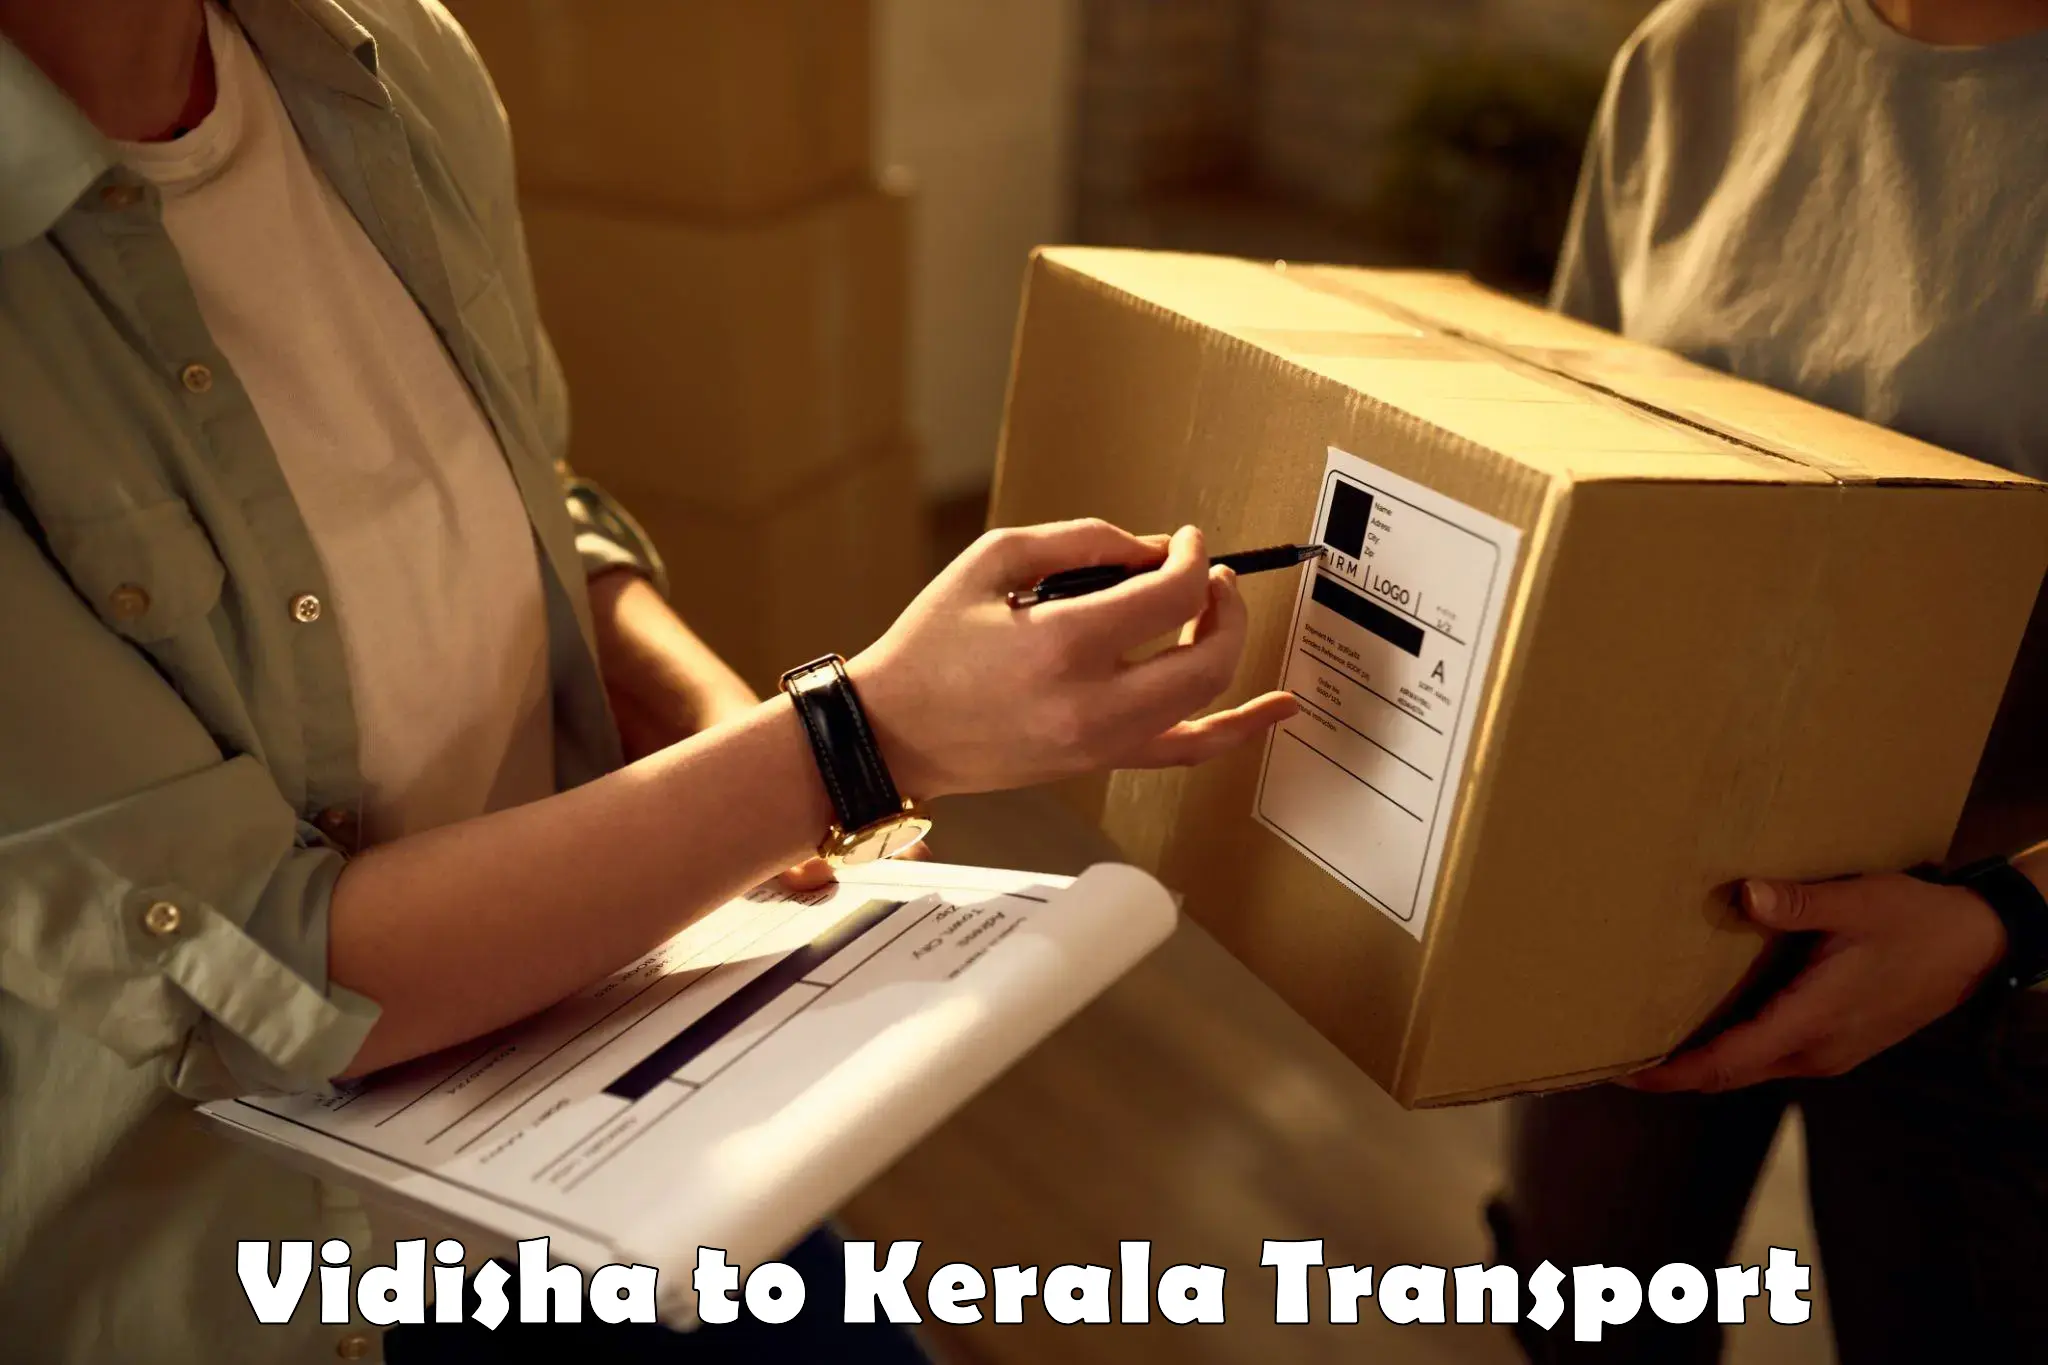 Online transport booking Vidisha to Pathanamthitta